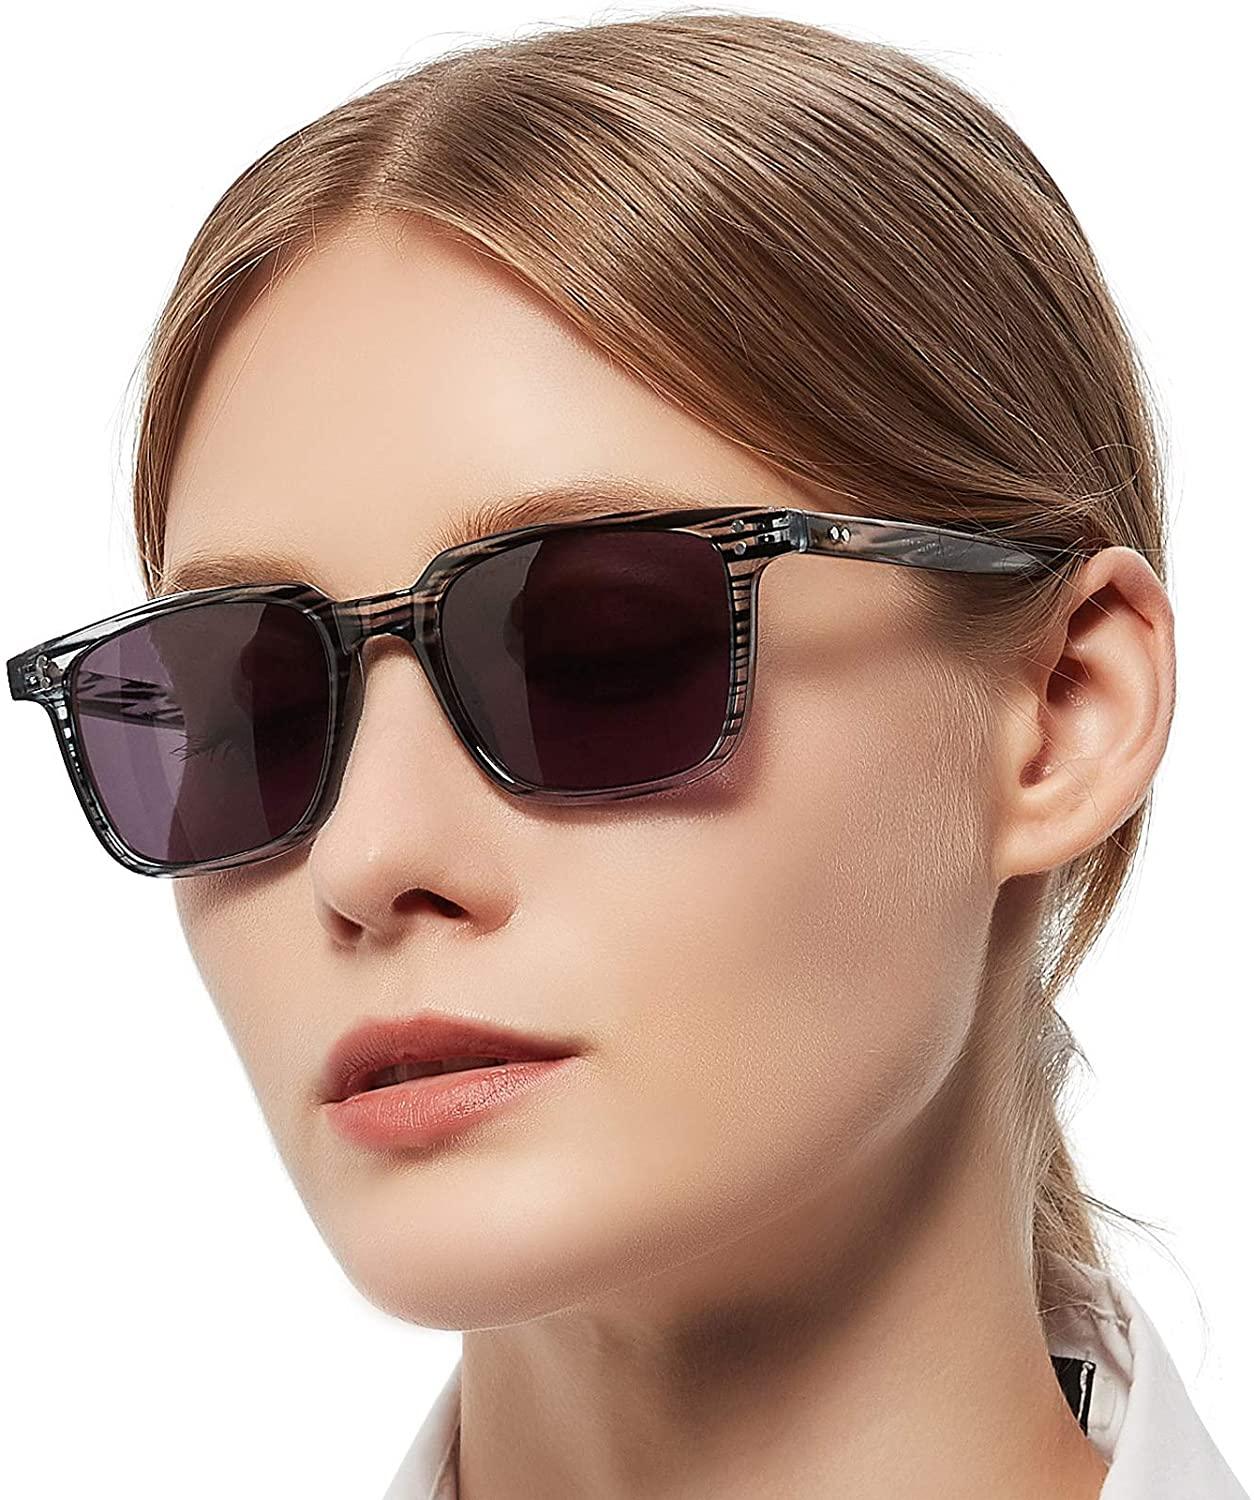 OCCI CHIARI Fashion Reading Glasses Reader Eyewear with Spring Hinge Sunglasses - Occichiari 